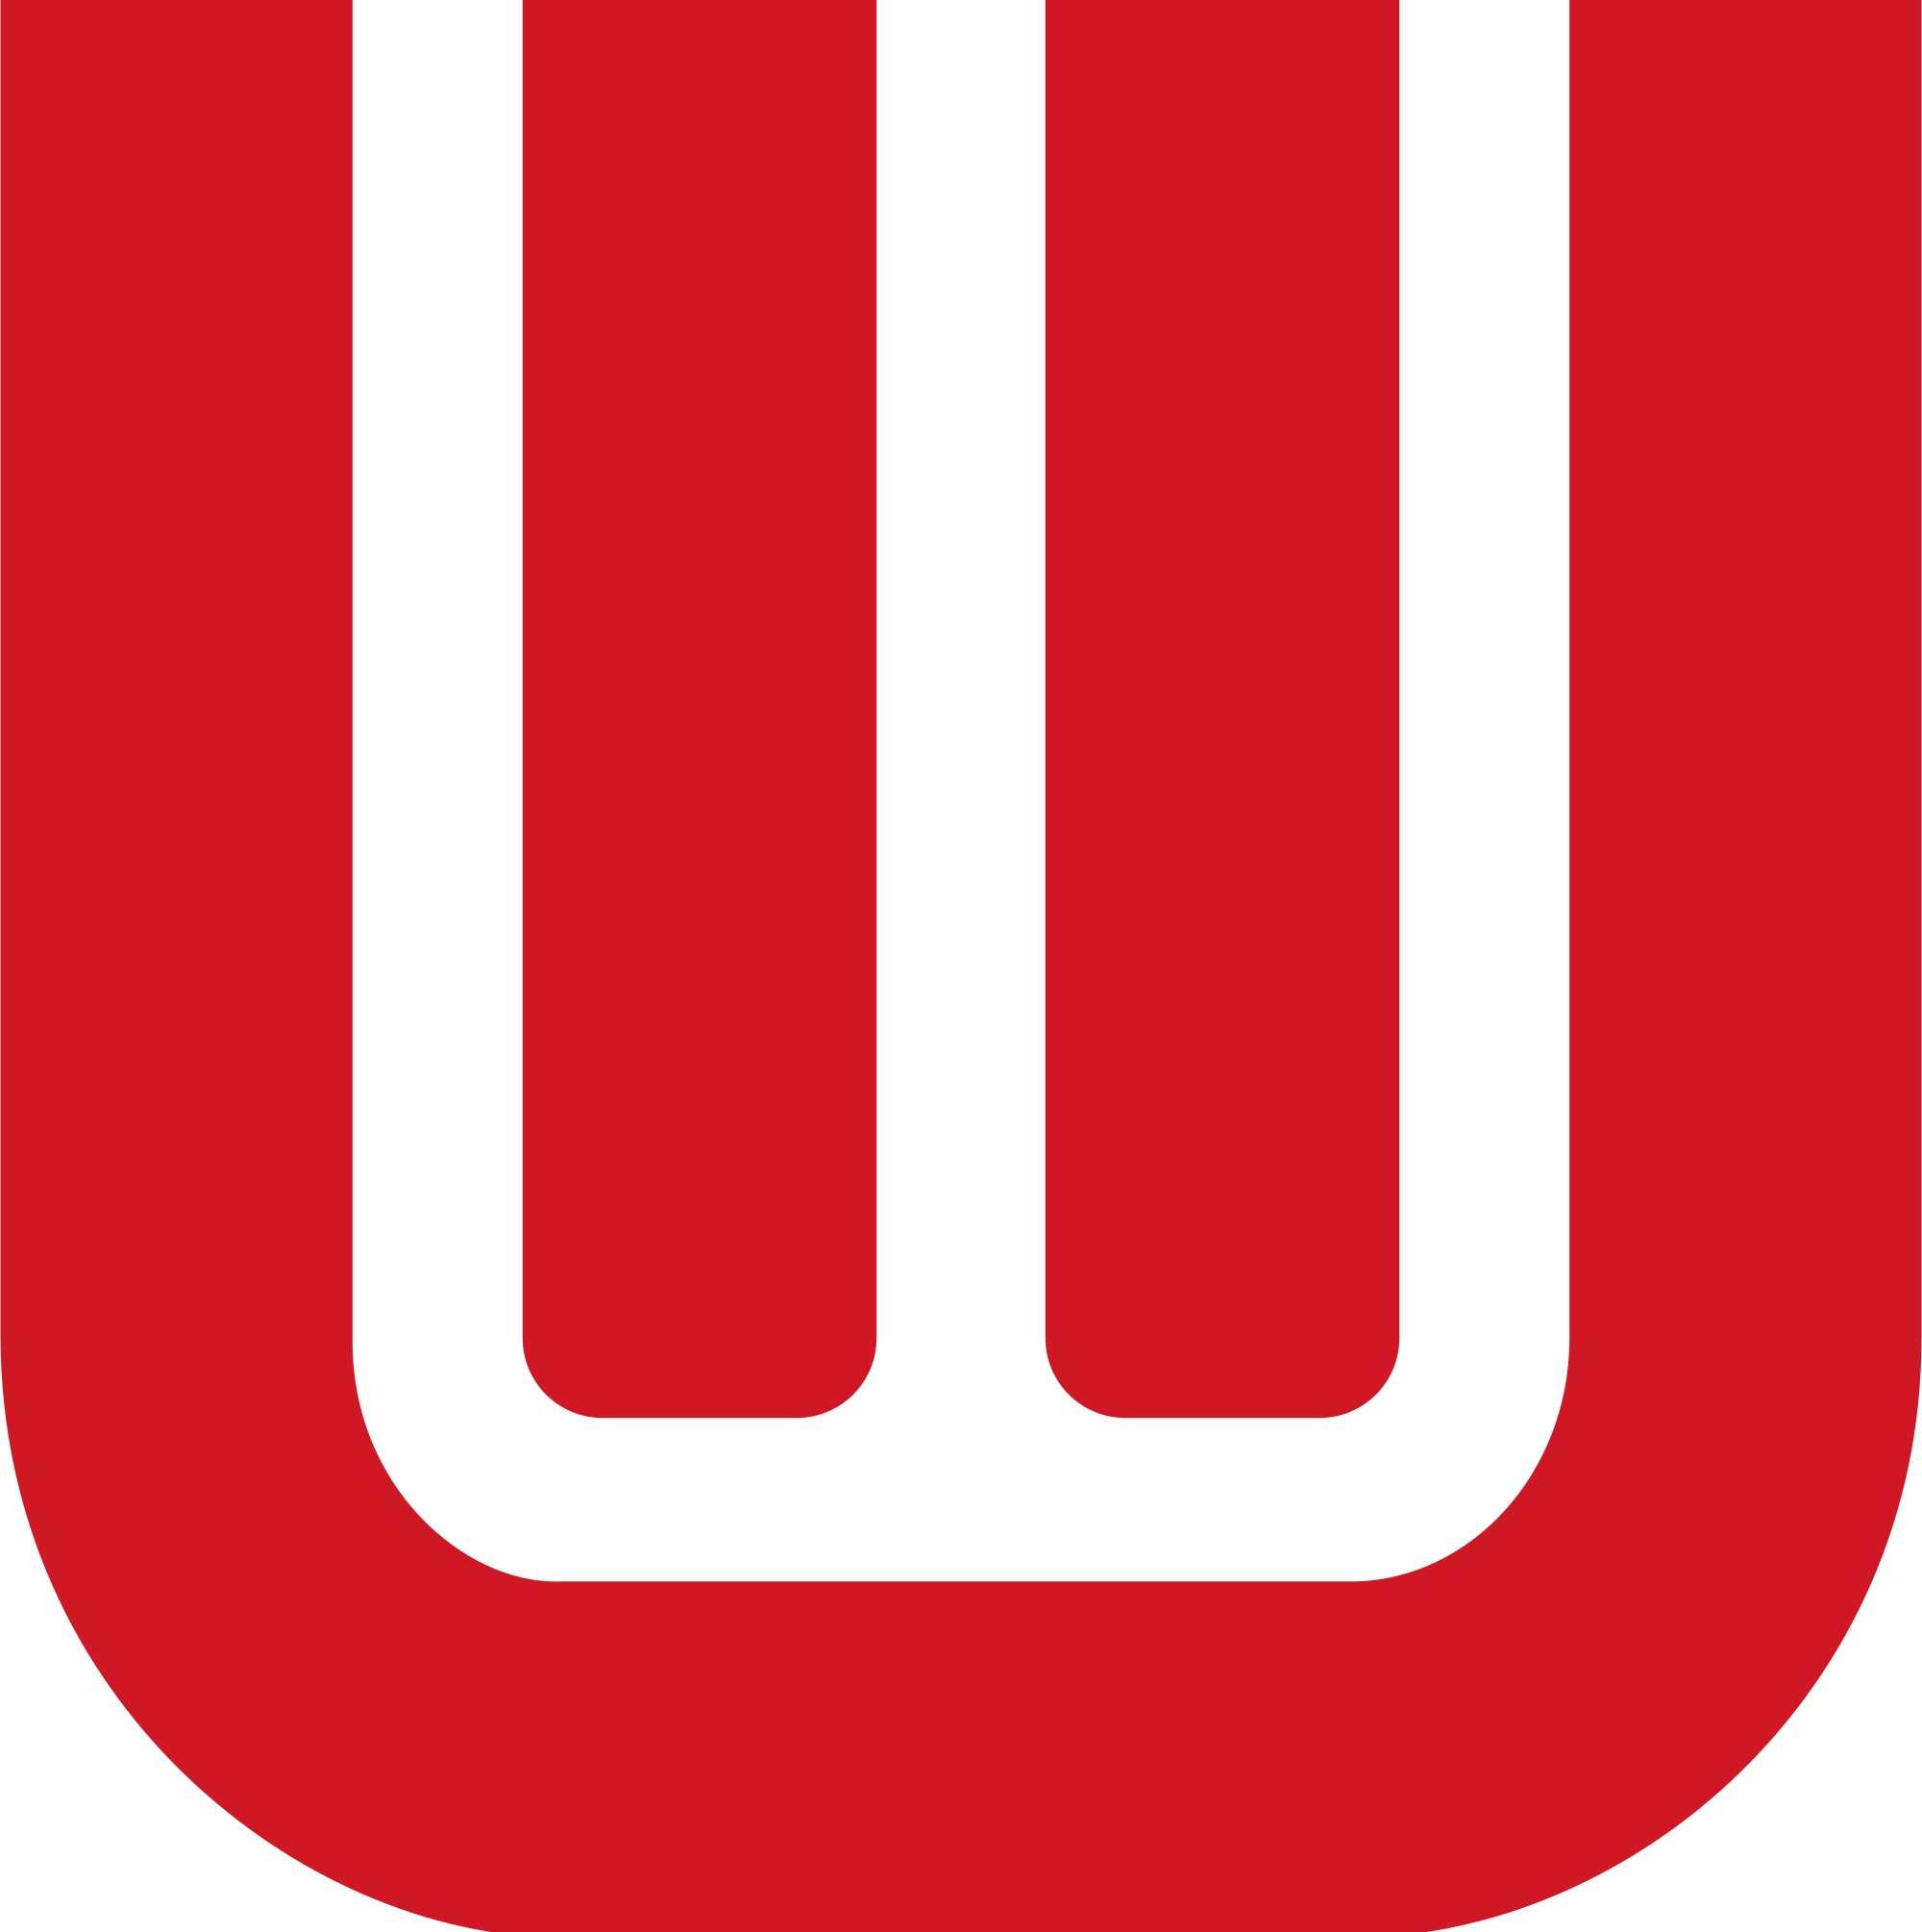 University of Wisconsin Logo - University of Wisconsin Marching Band